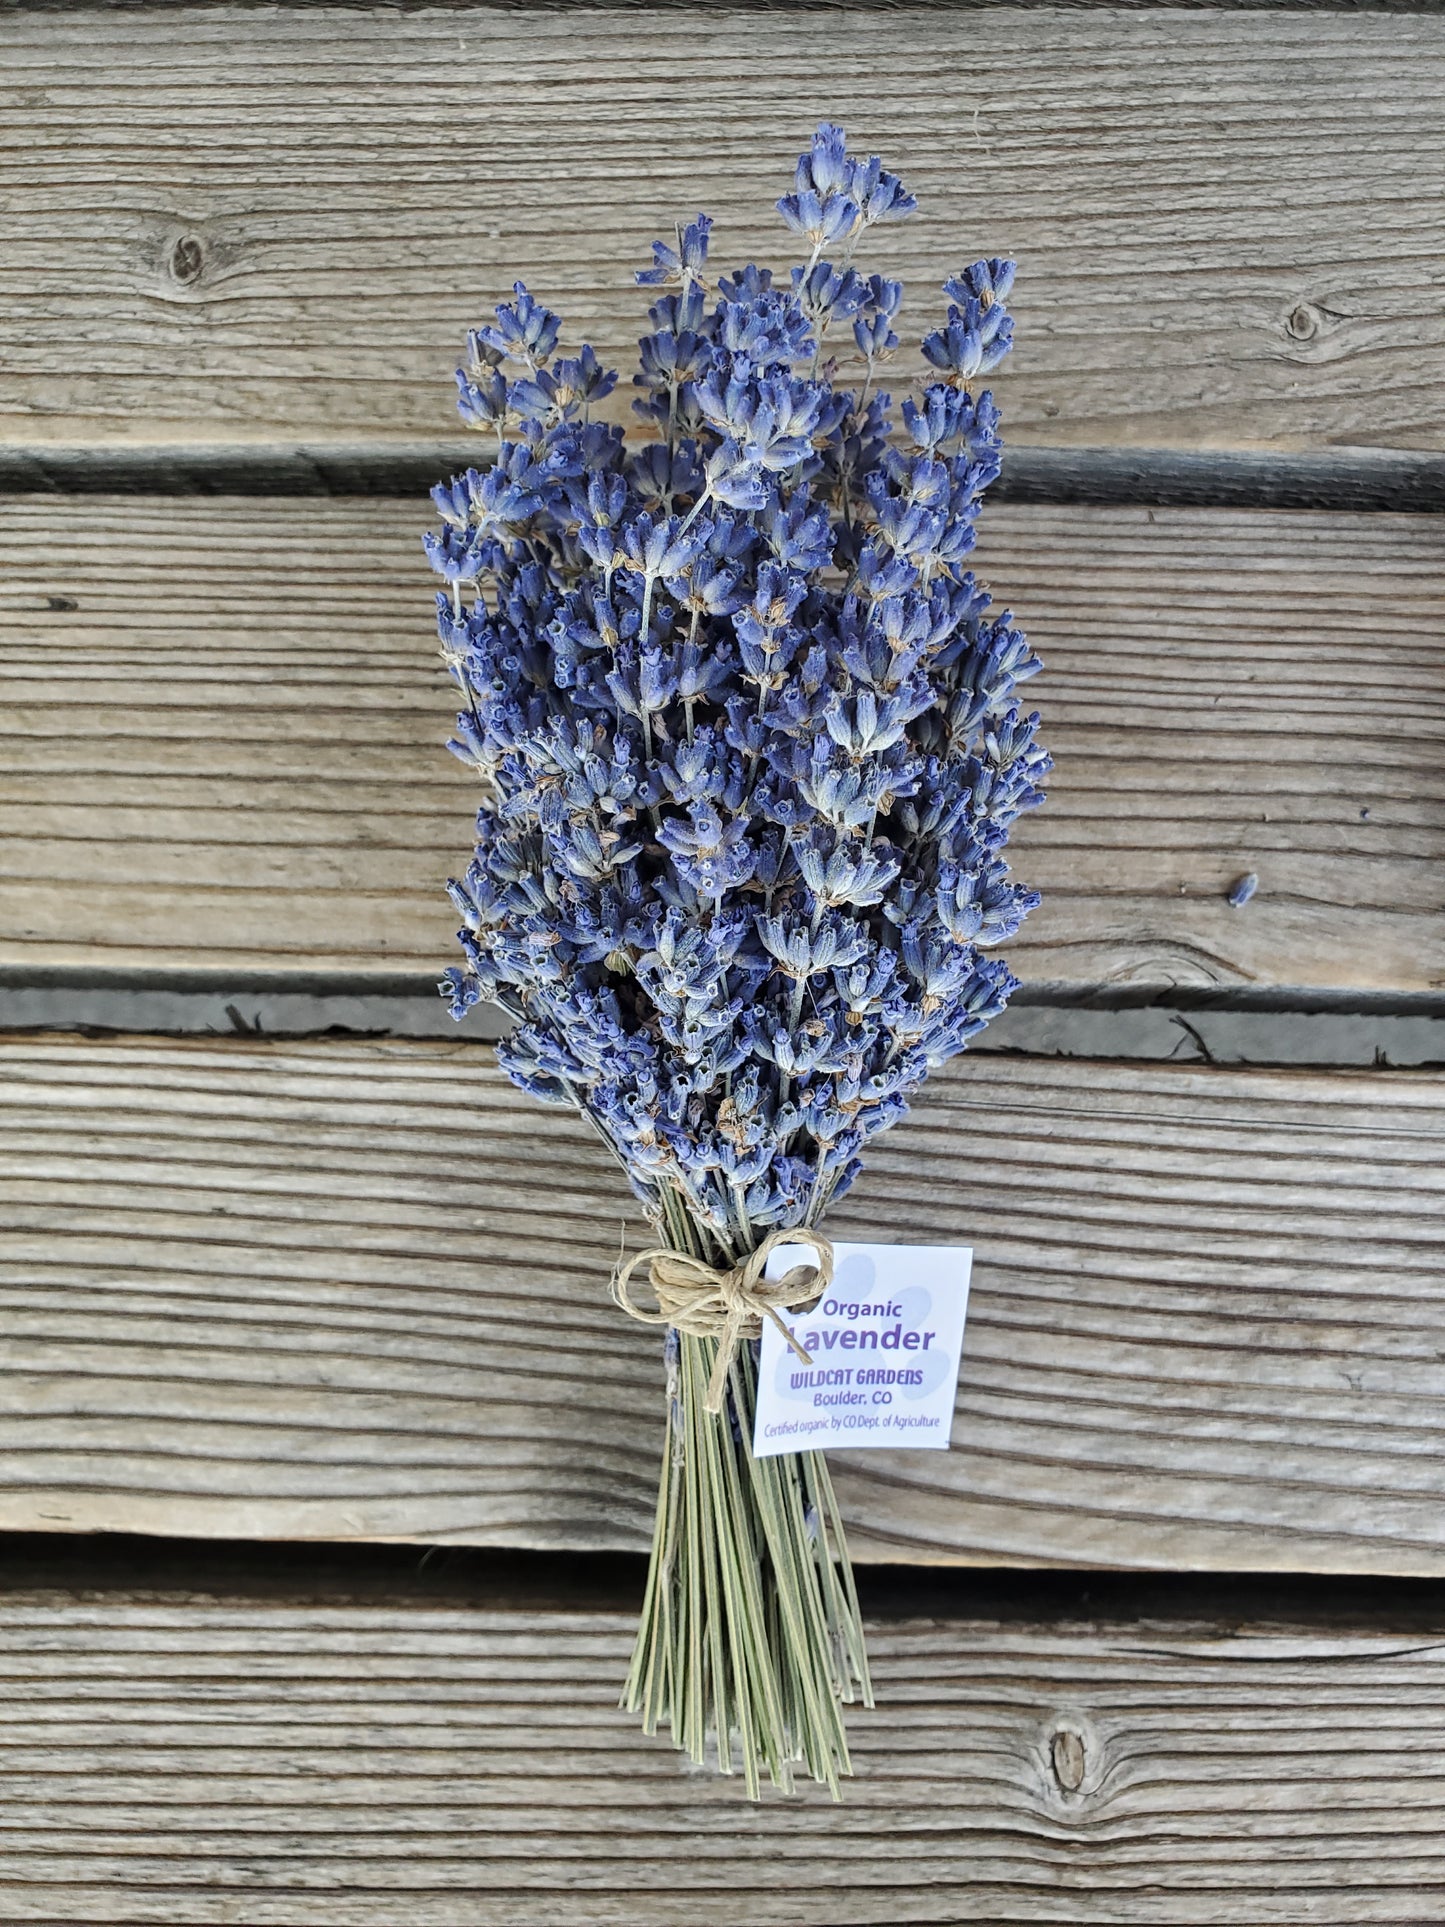 Lavender Bundle - Organic (Wildcat Gardens)